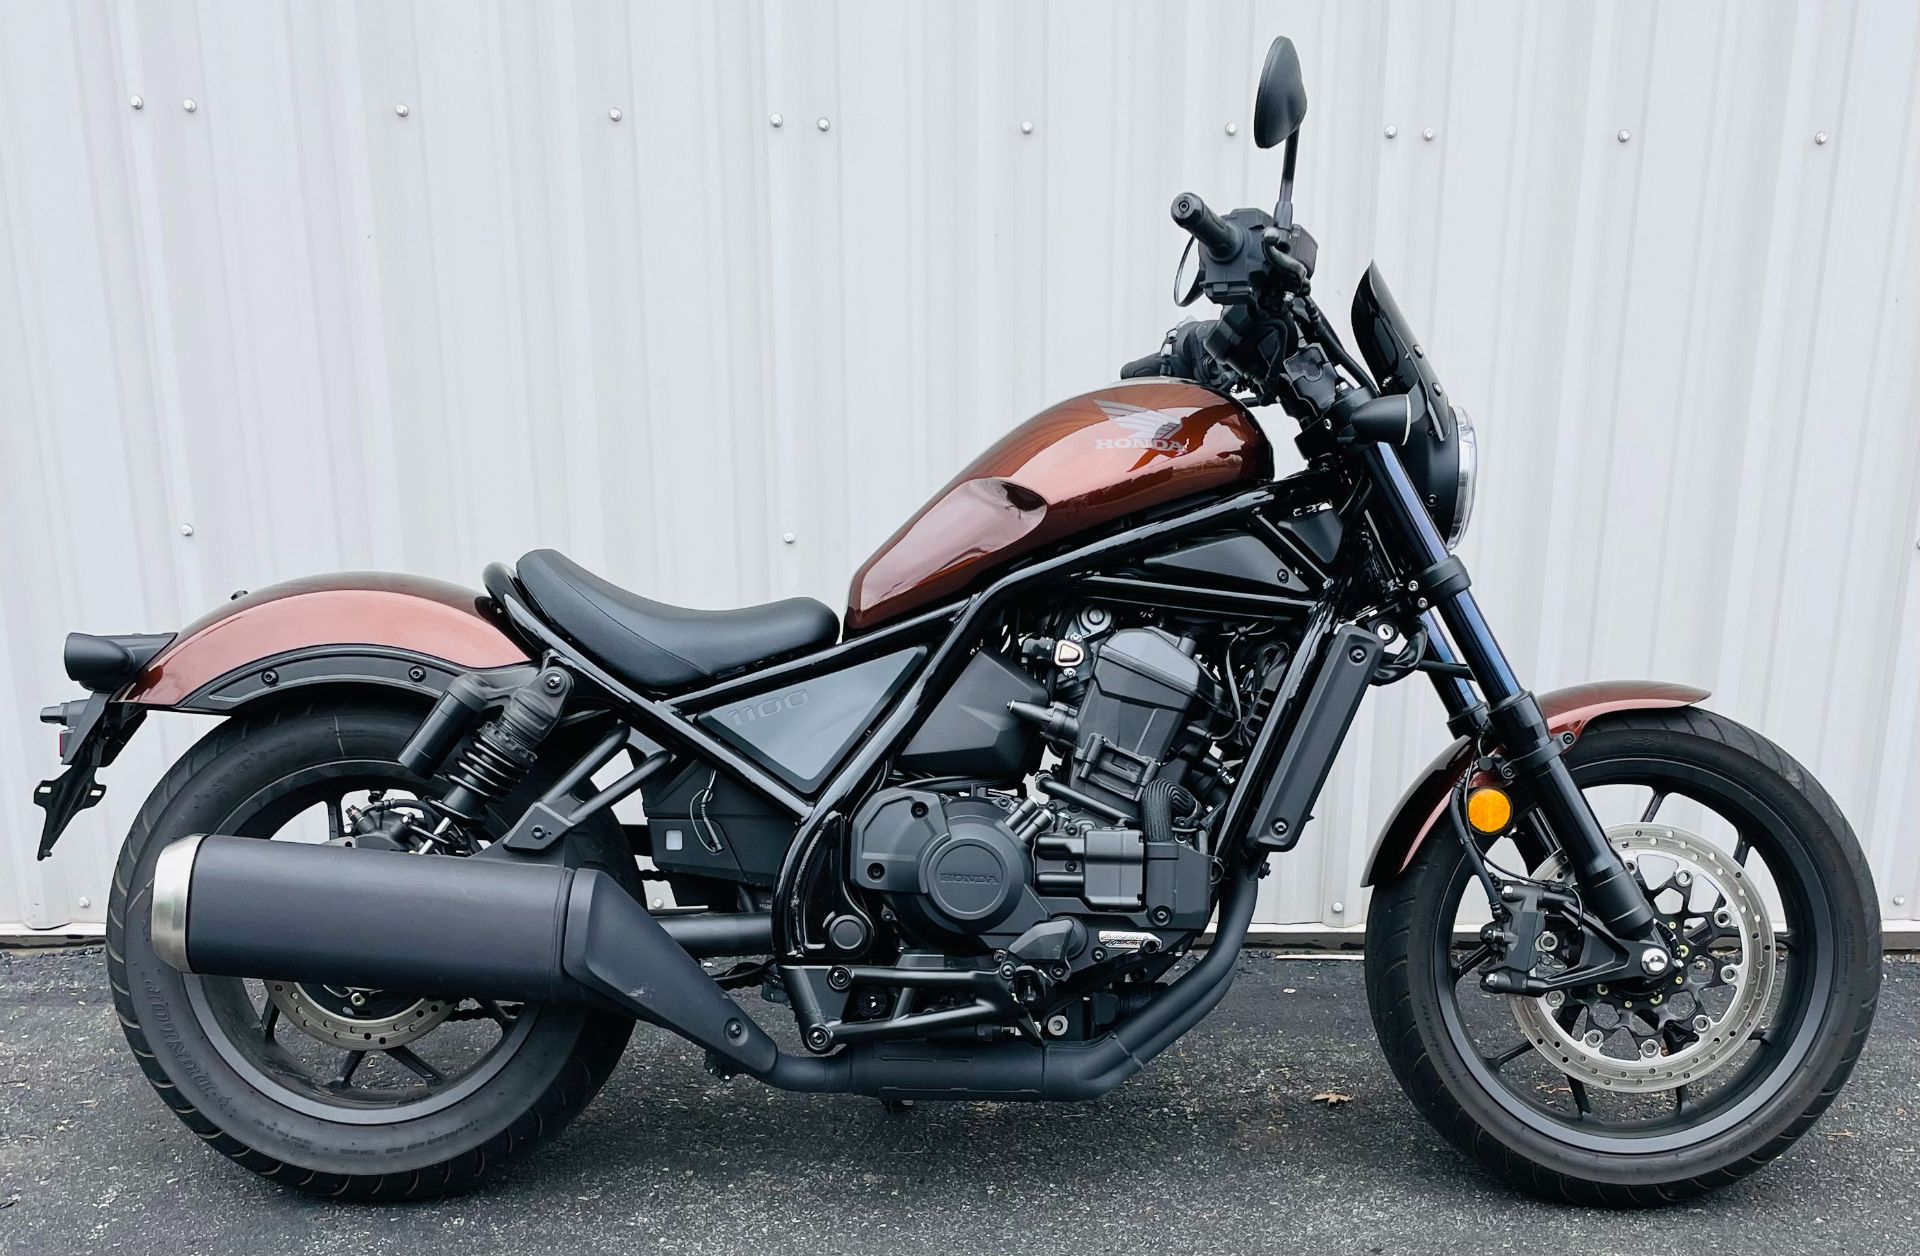 New 2022 Honda Rebel 1100 DCT | Motorcycles in Clarksville TN | 100034 ...